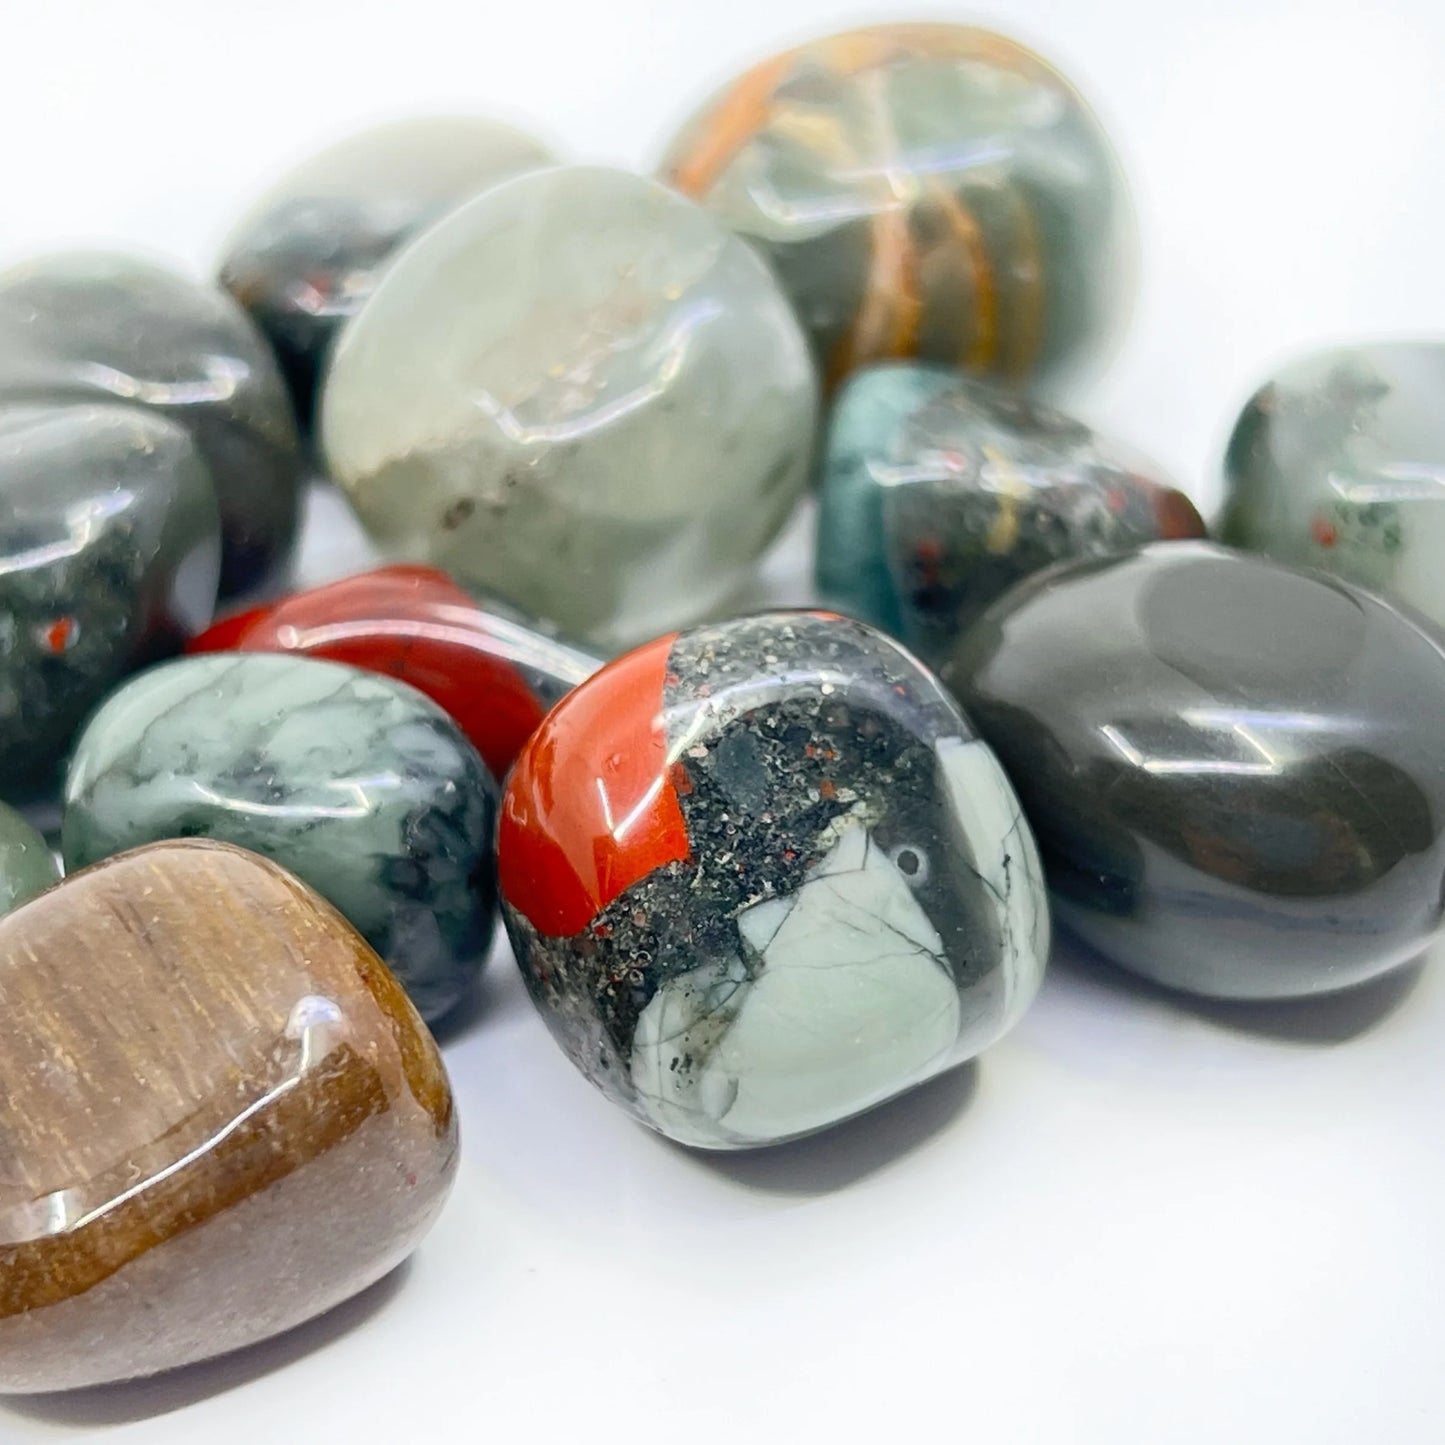 Bloodstone Tumbled Stones - Bulk Wholesale choose: 1lb, 3lbs or 5lbs